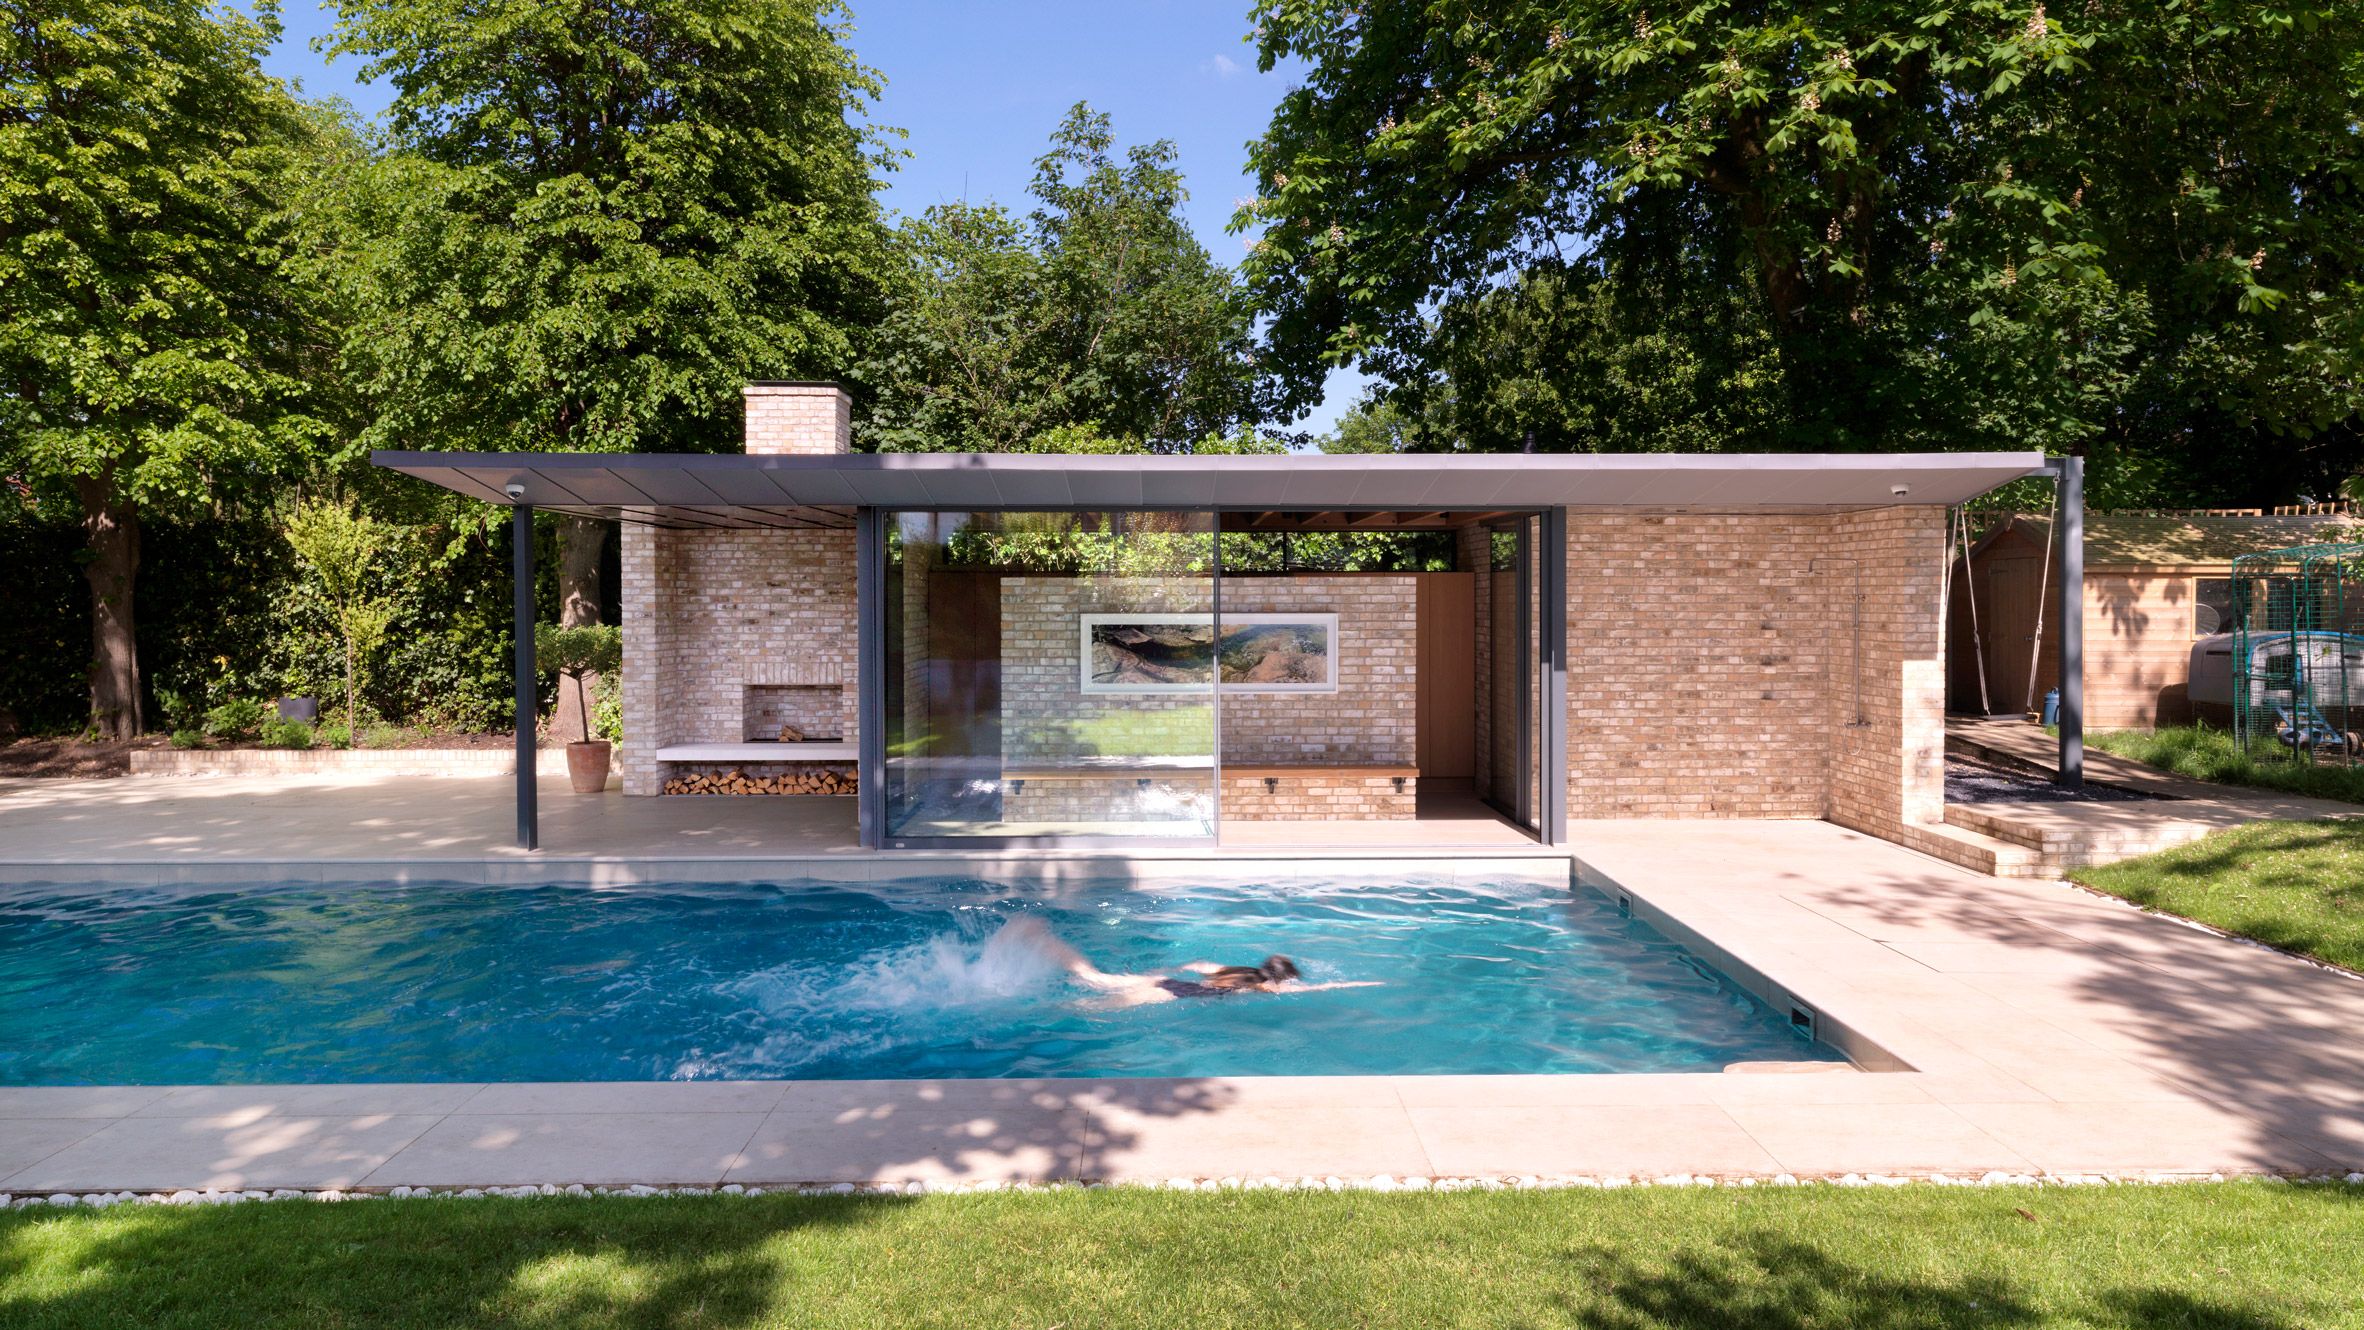 Garten Pavillons Frisch Threefold Architects Has Pleted A Pair Of Simple Brick